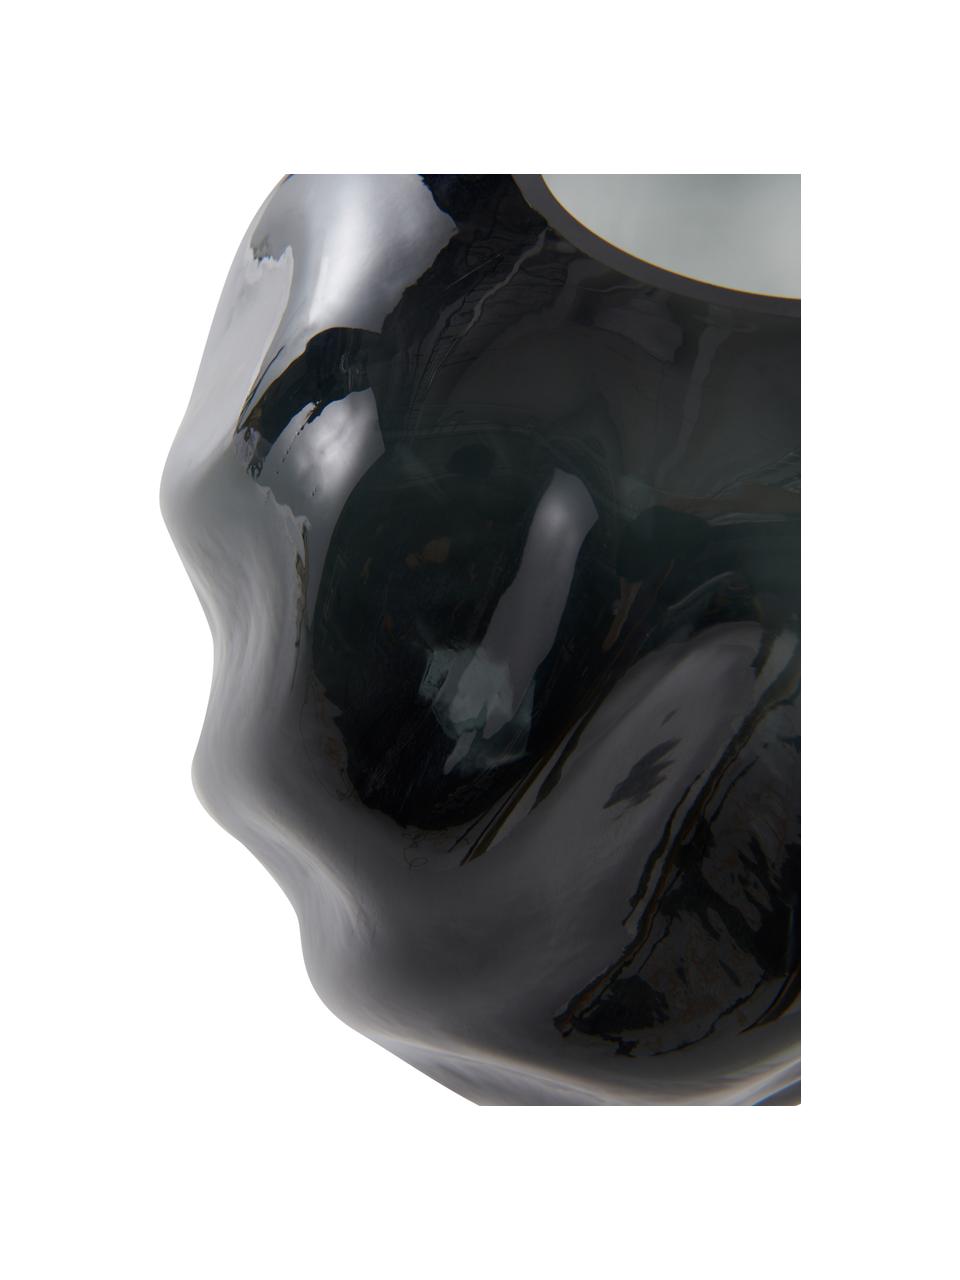 Jarrón de vidrio Brielle, Vidrio, Tonos negros transparente, Ø 20 x Al 21 cm